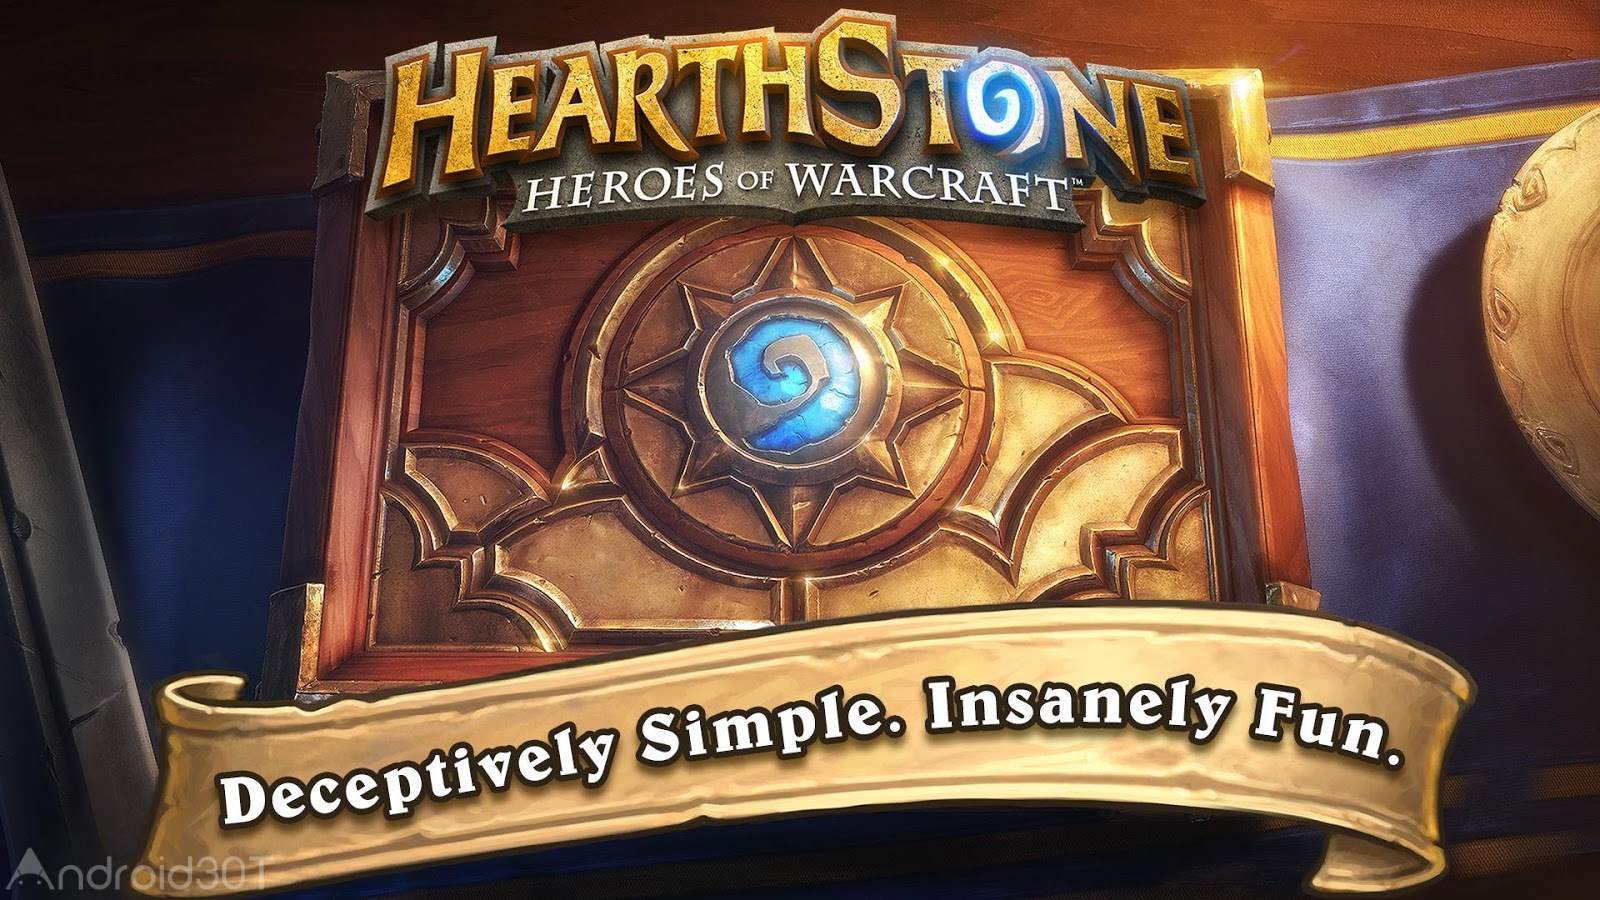 دانلود Hearthstone Heroes of Warcraft 24.6.154818 – بازی کارتی قهرمانان وارکرافت اندروید